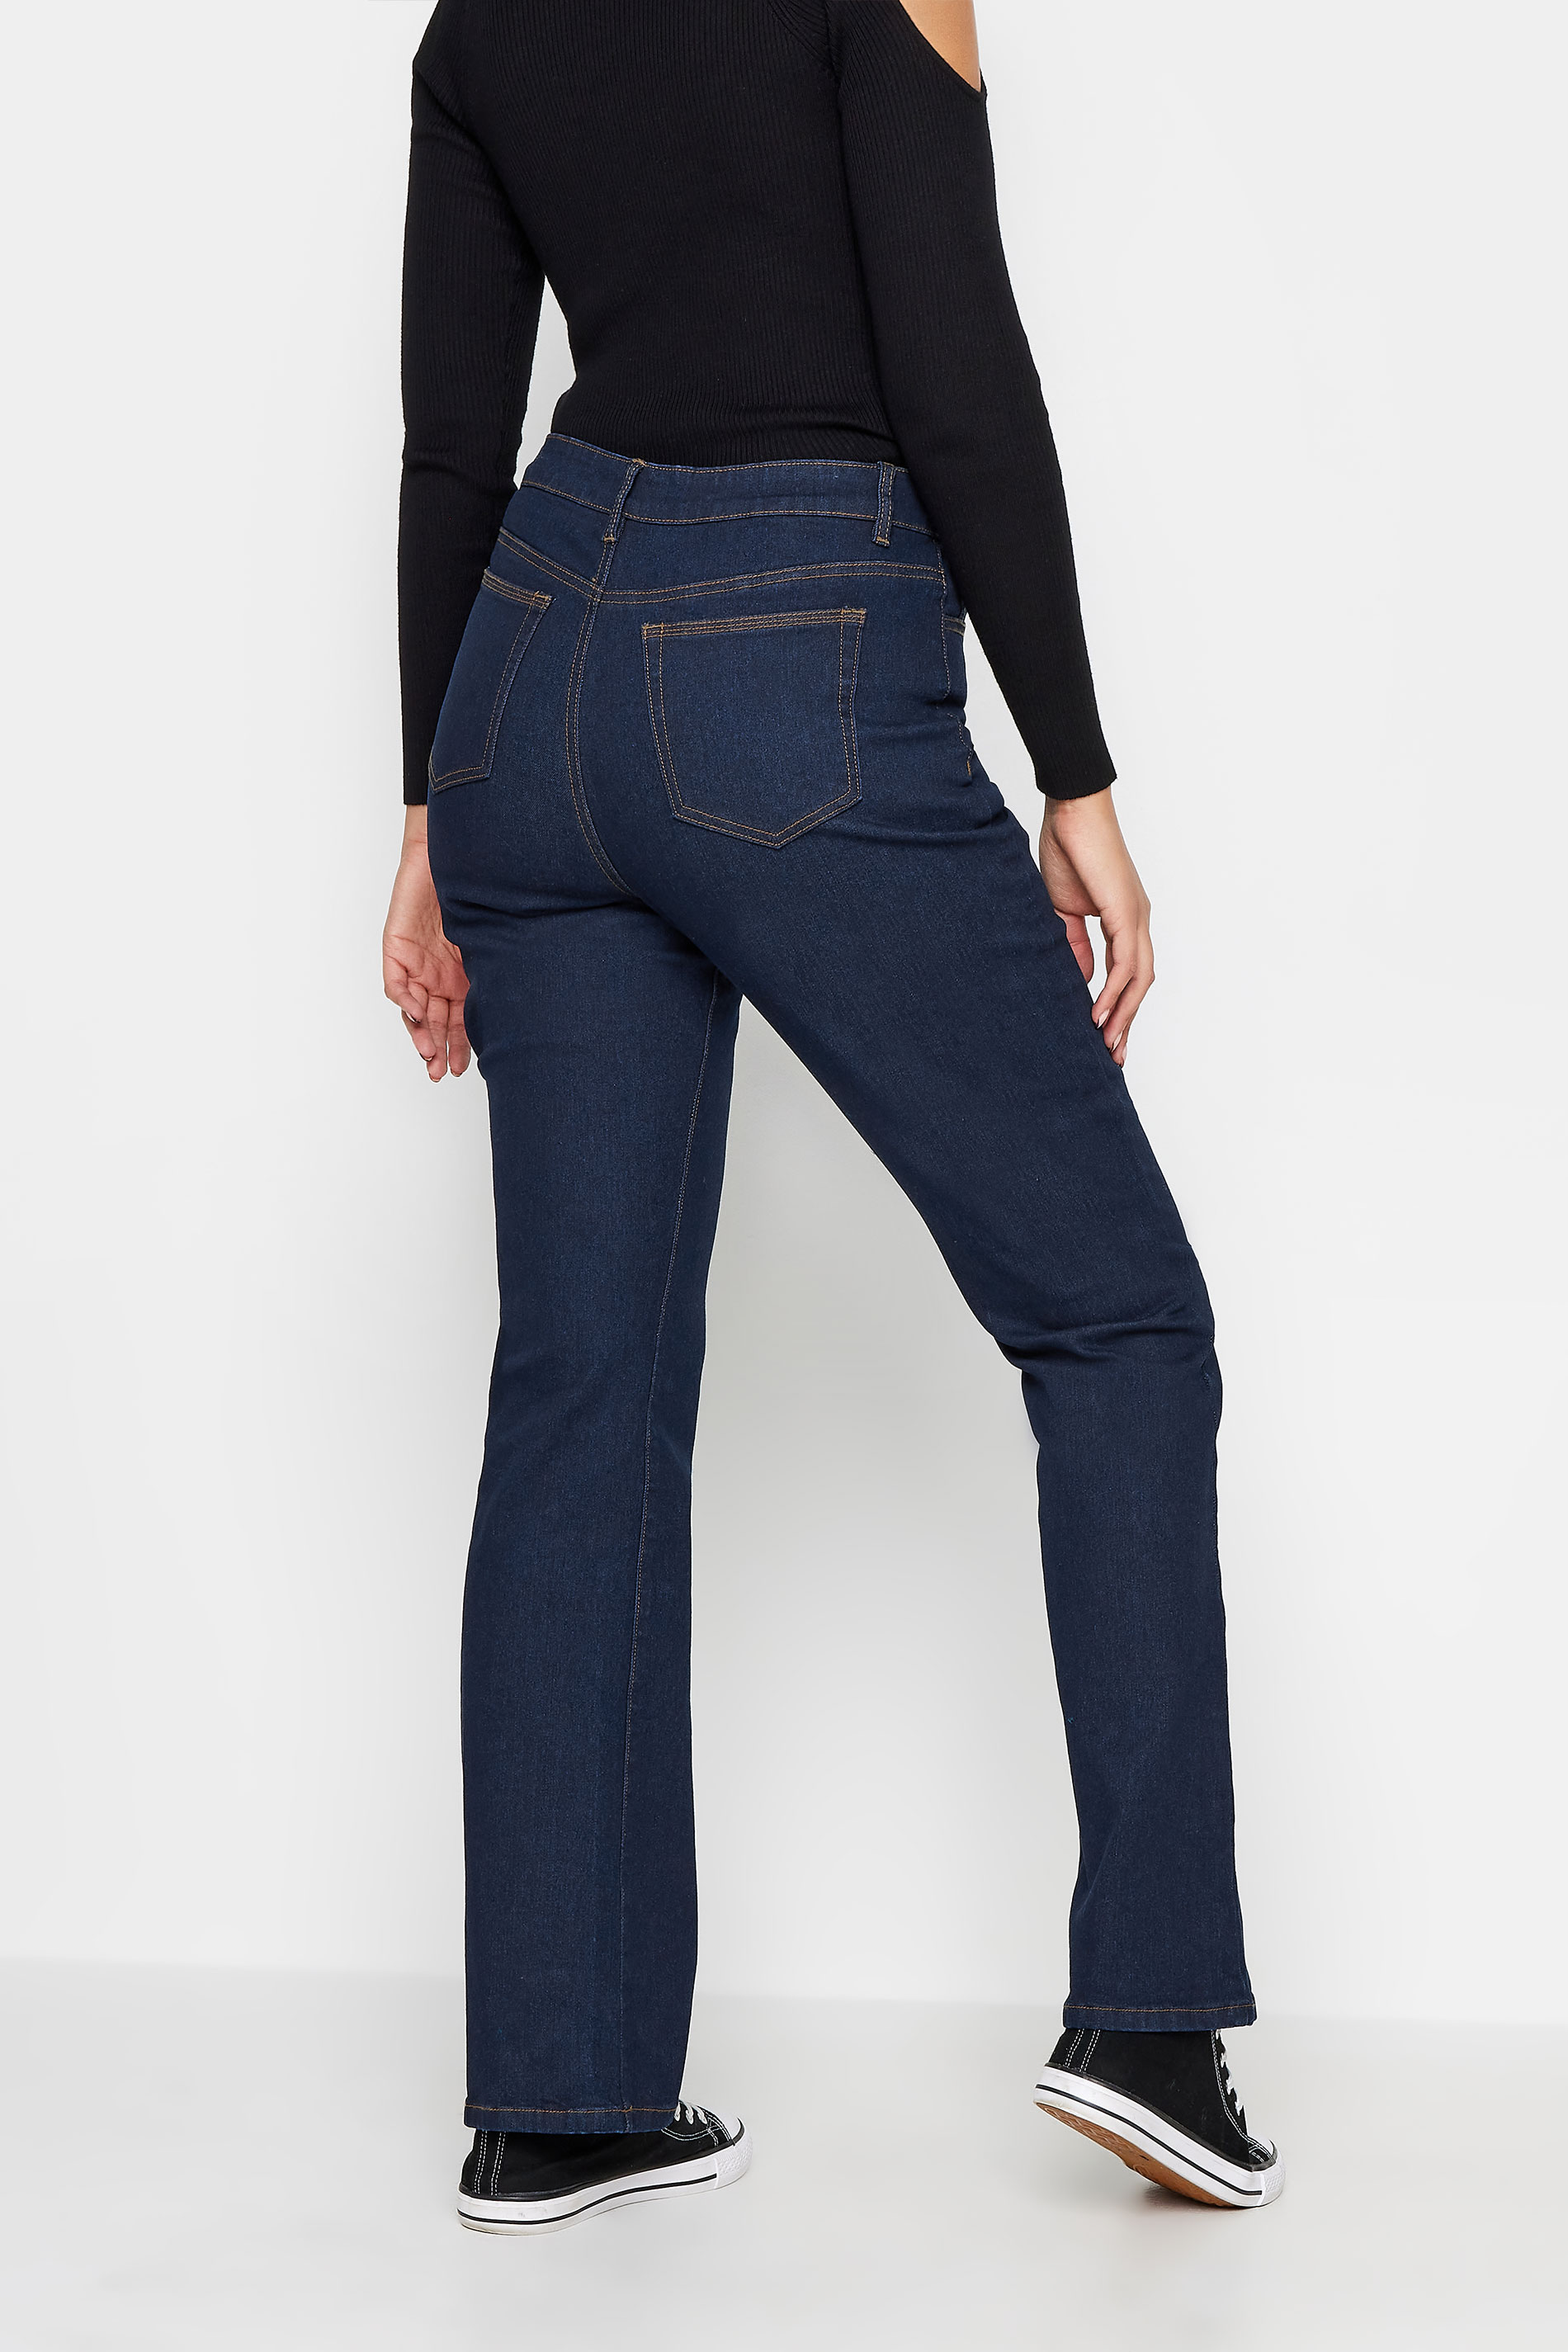 LTS Tall Indigo Blue Denim Bootcut Jeans | Long Tall Sally 3